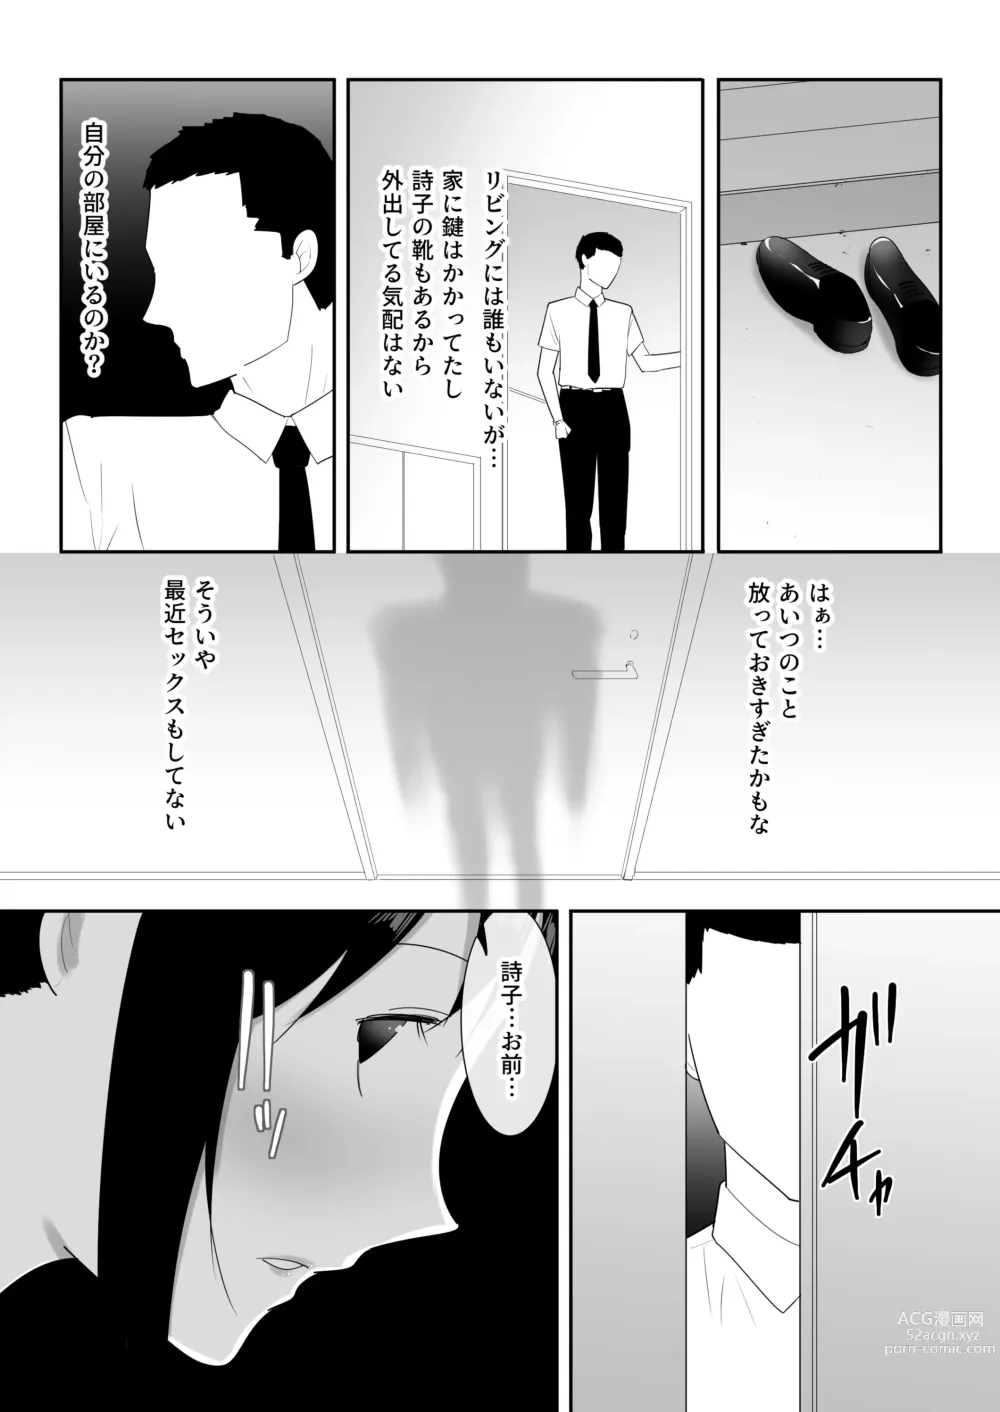 Page 51 of doujinshi Wagaya ni Inu ga Yattekita